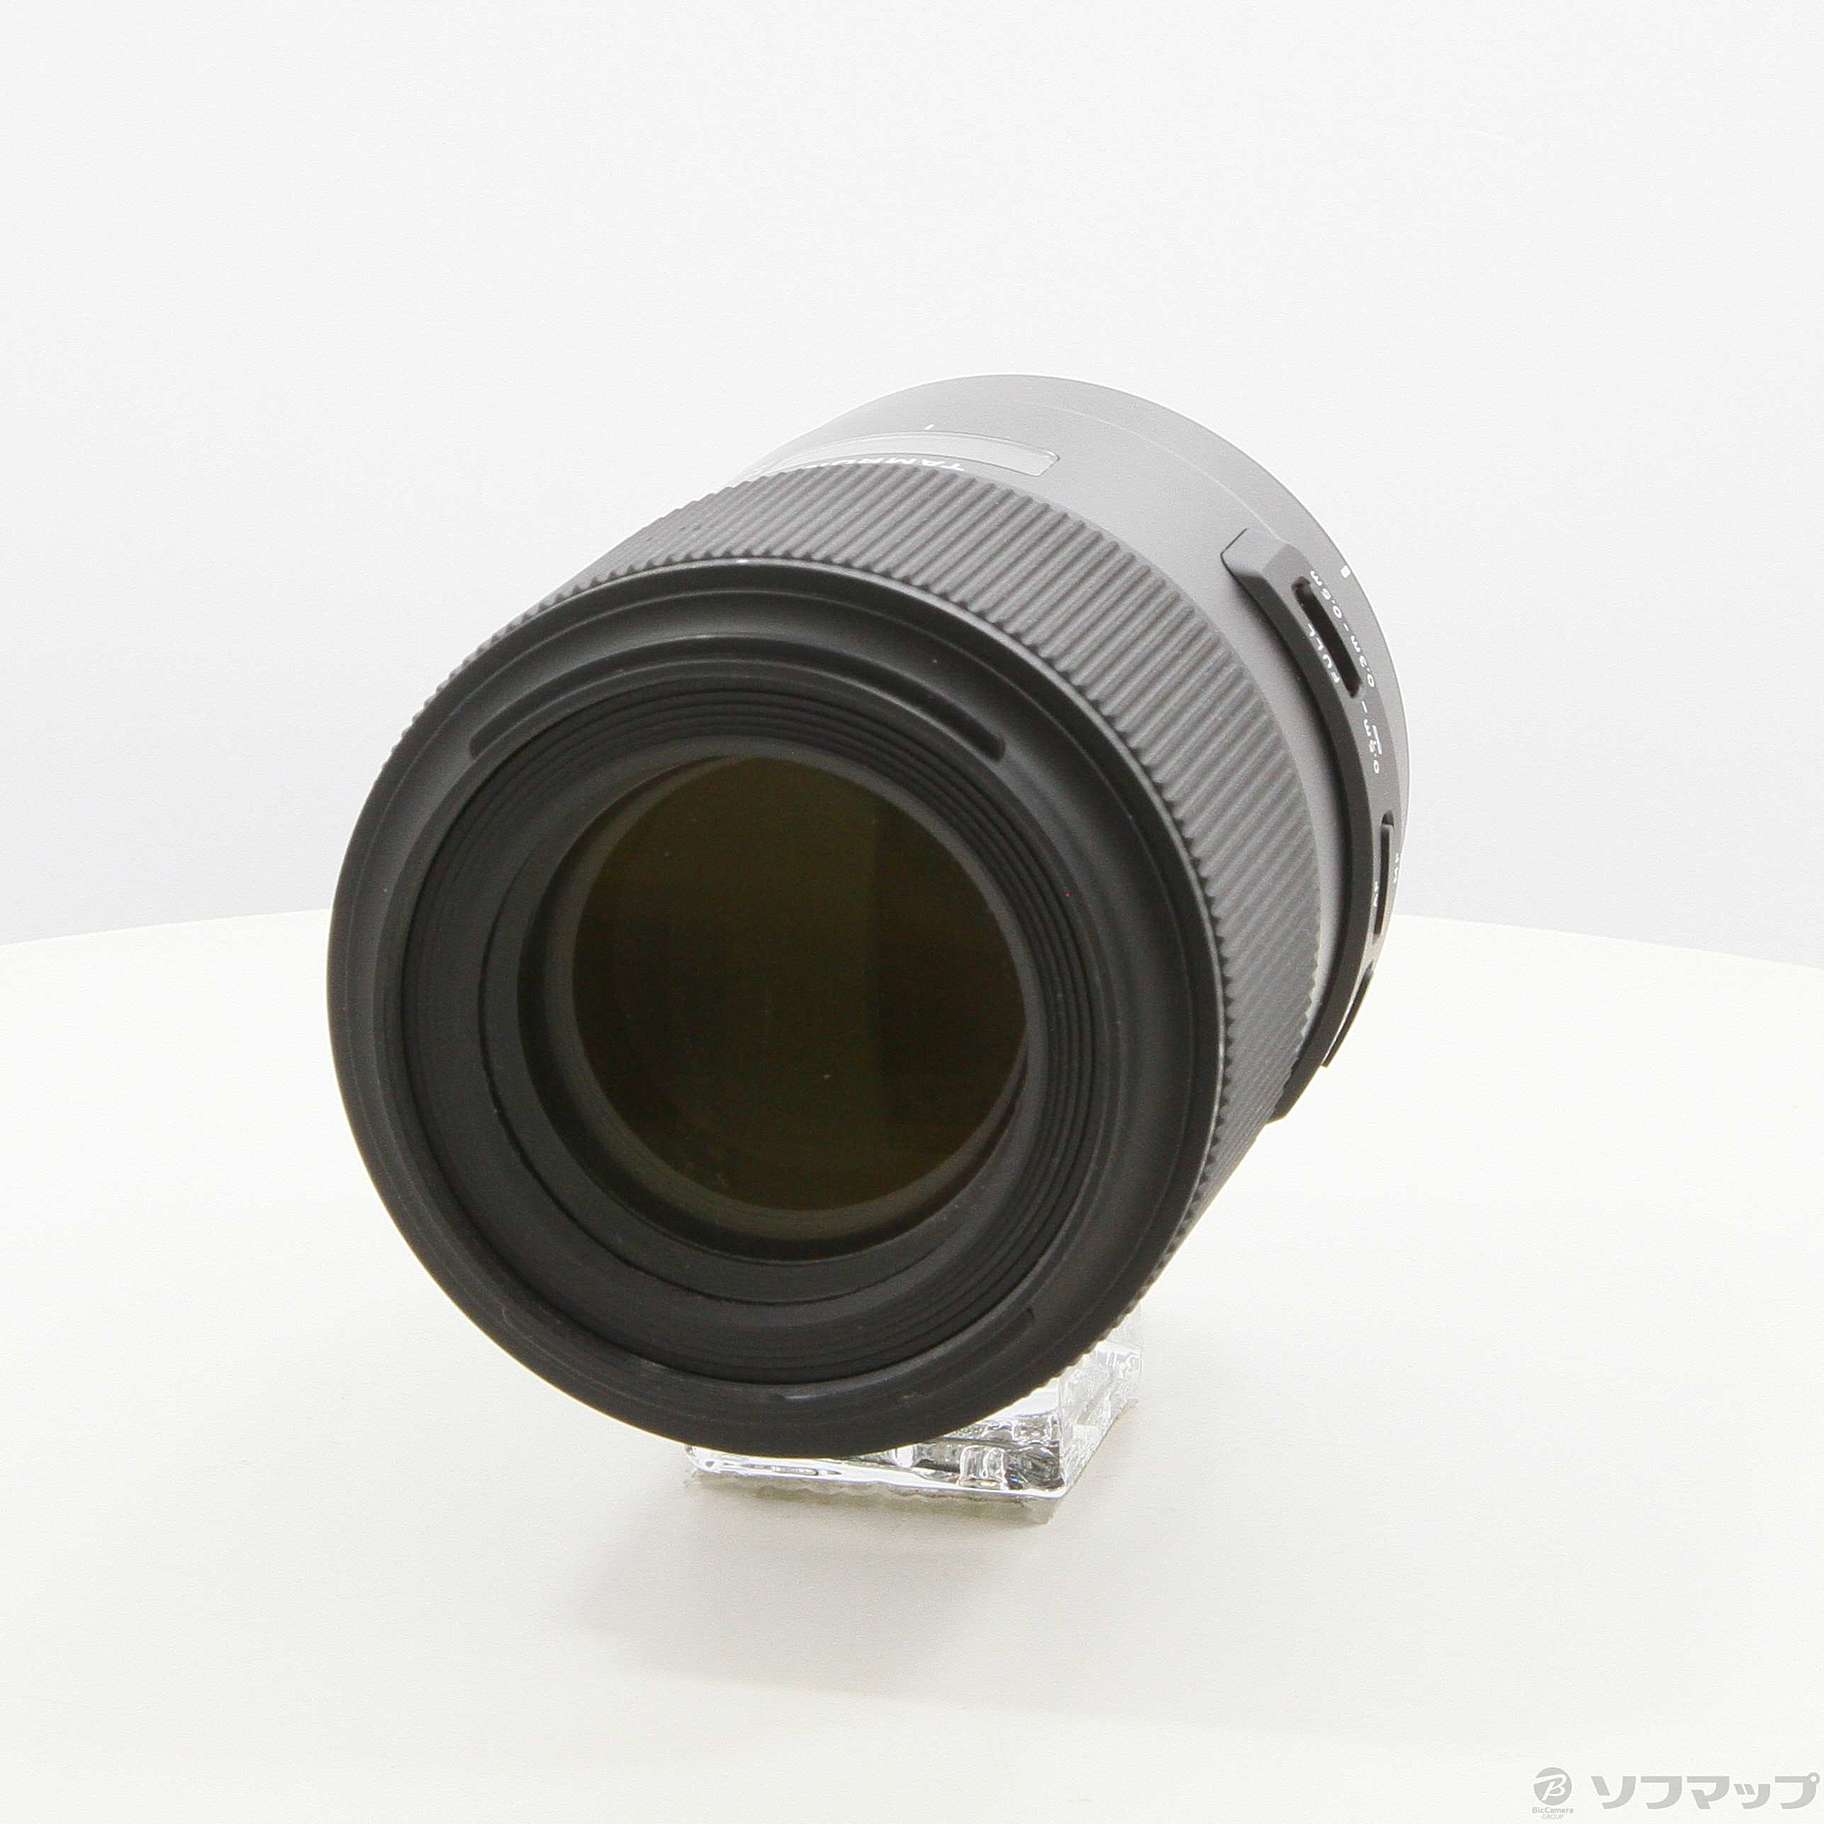 中古品〕 TAMRON SP 90mm F／2.8 Di MACRO 1:1 VC USD (F017) (Canon